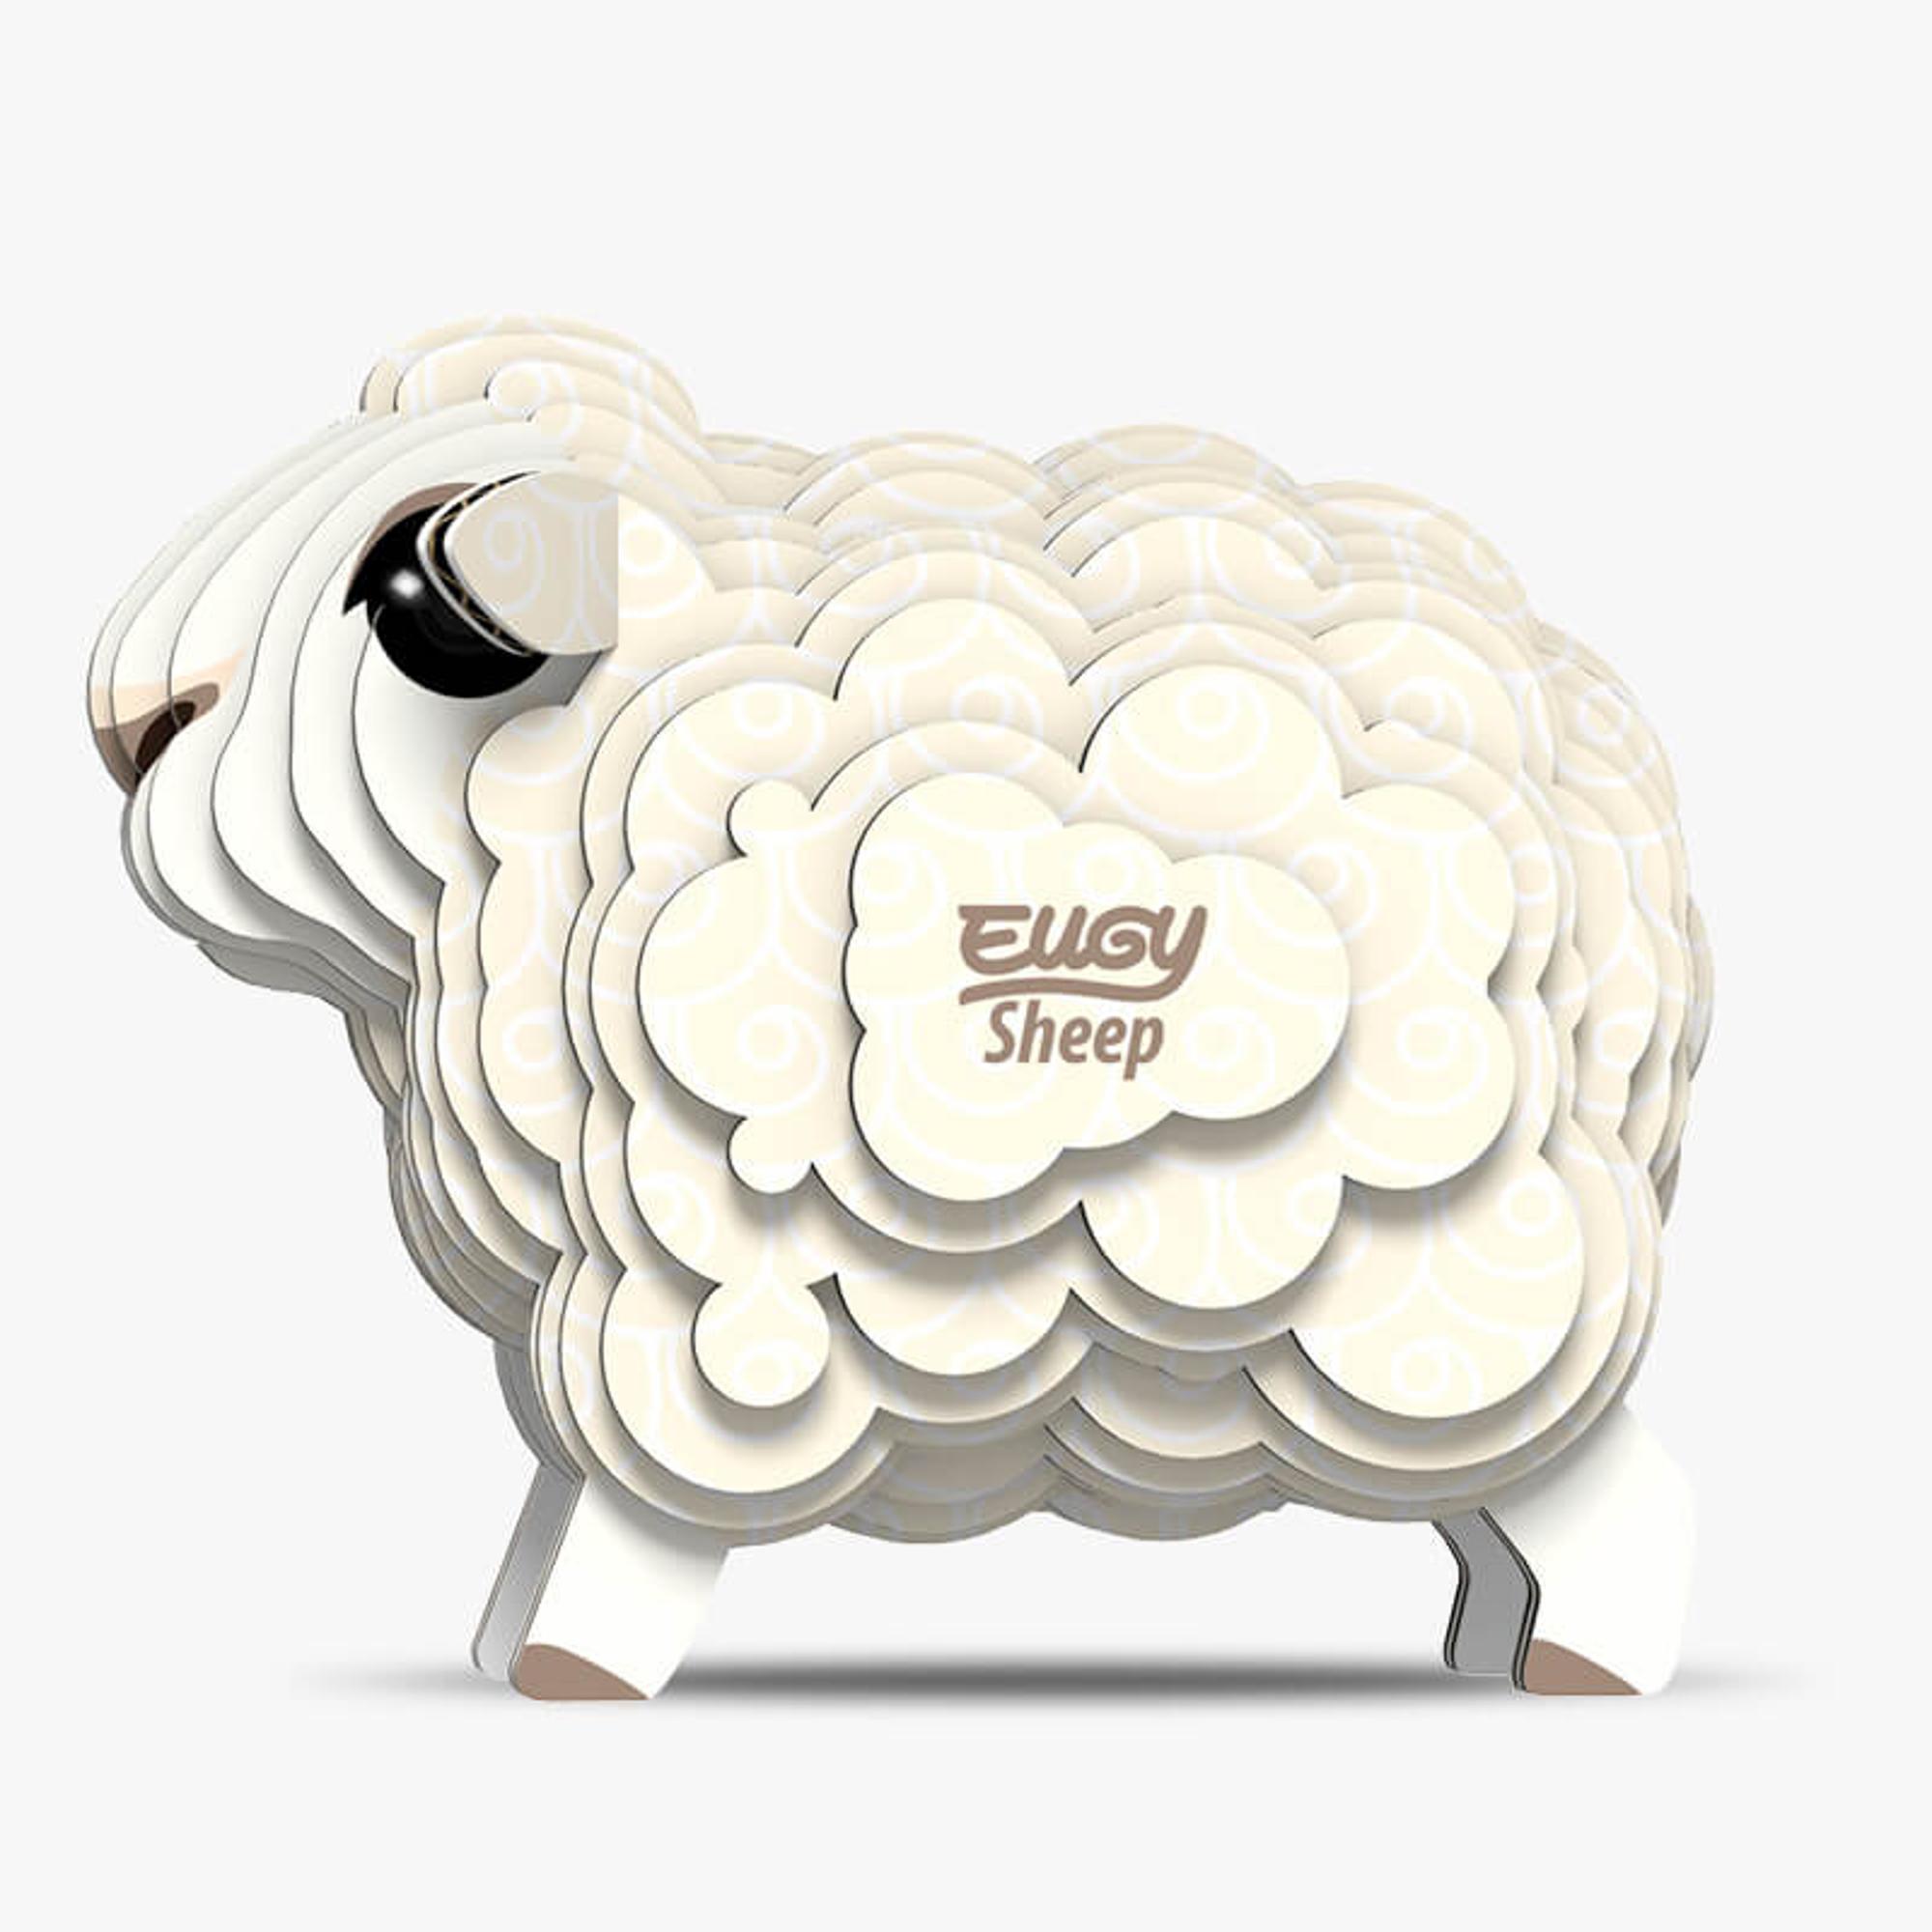 Sheep 3D Cardboard Model Kit